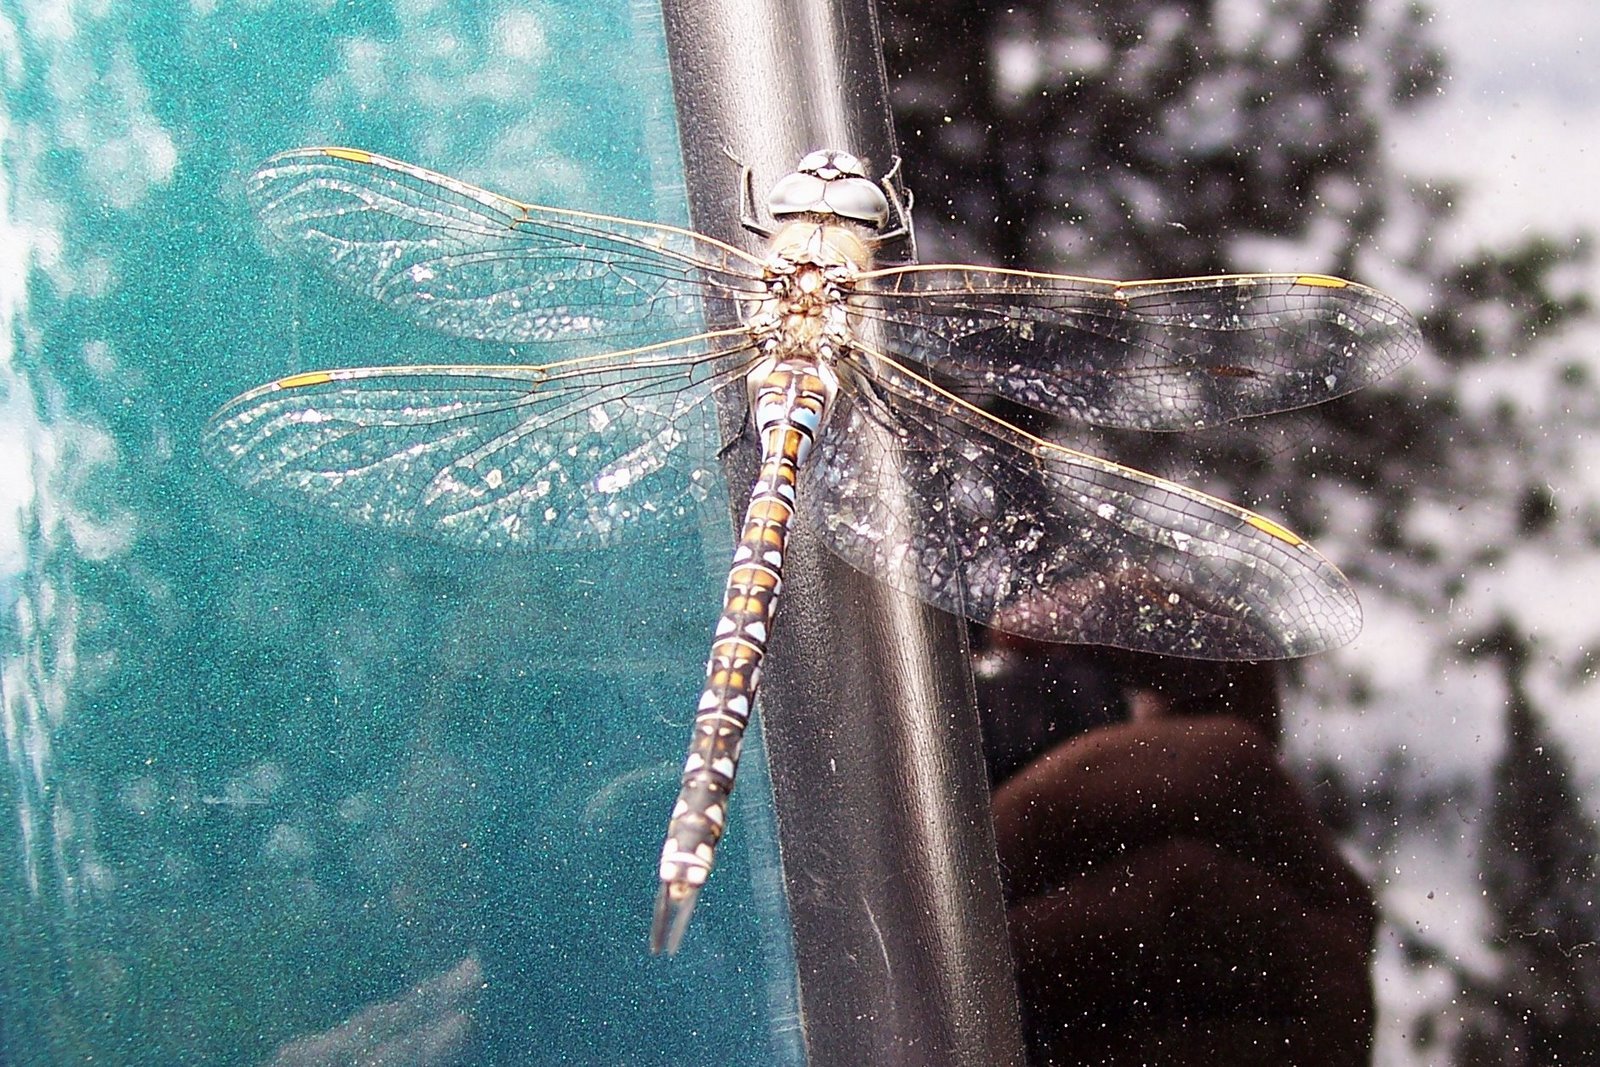 [dragonfly001.jpg]